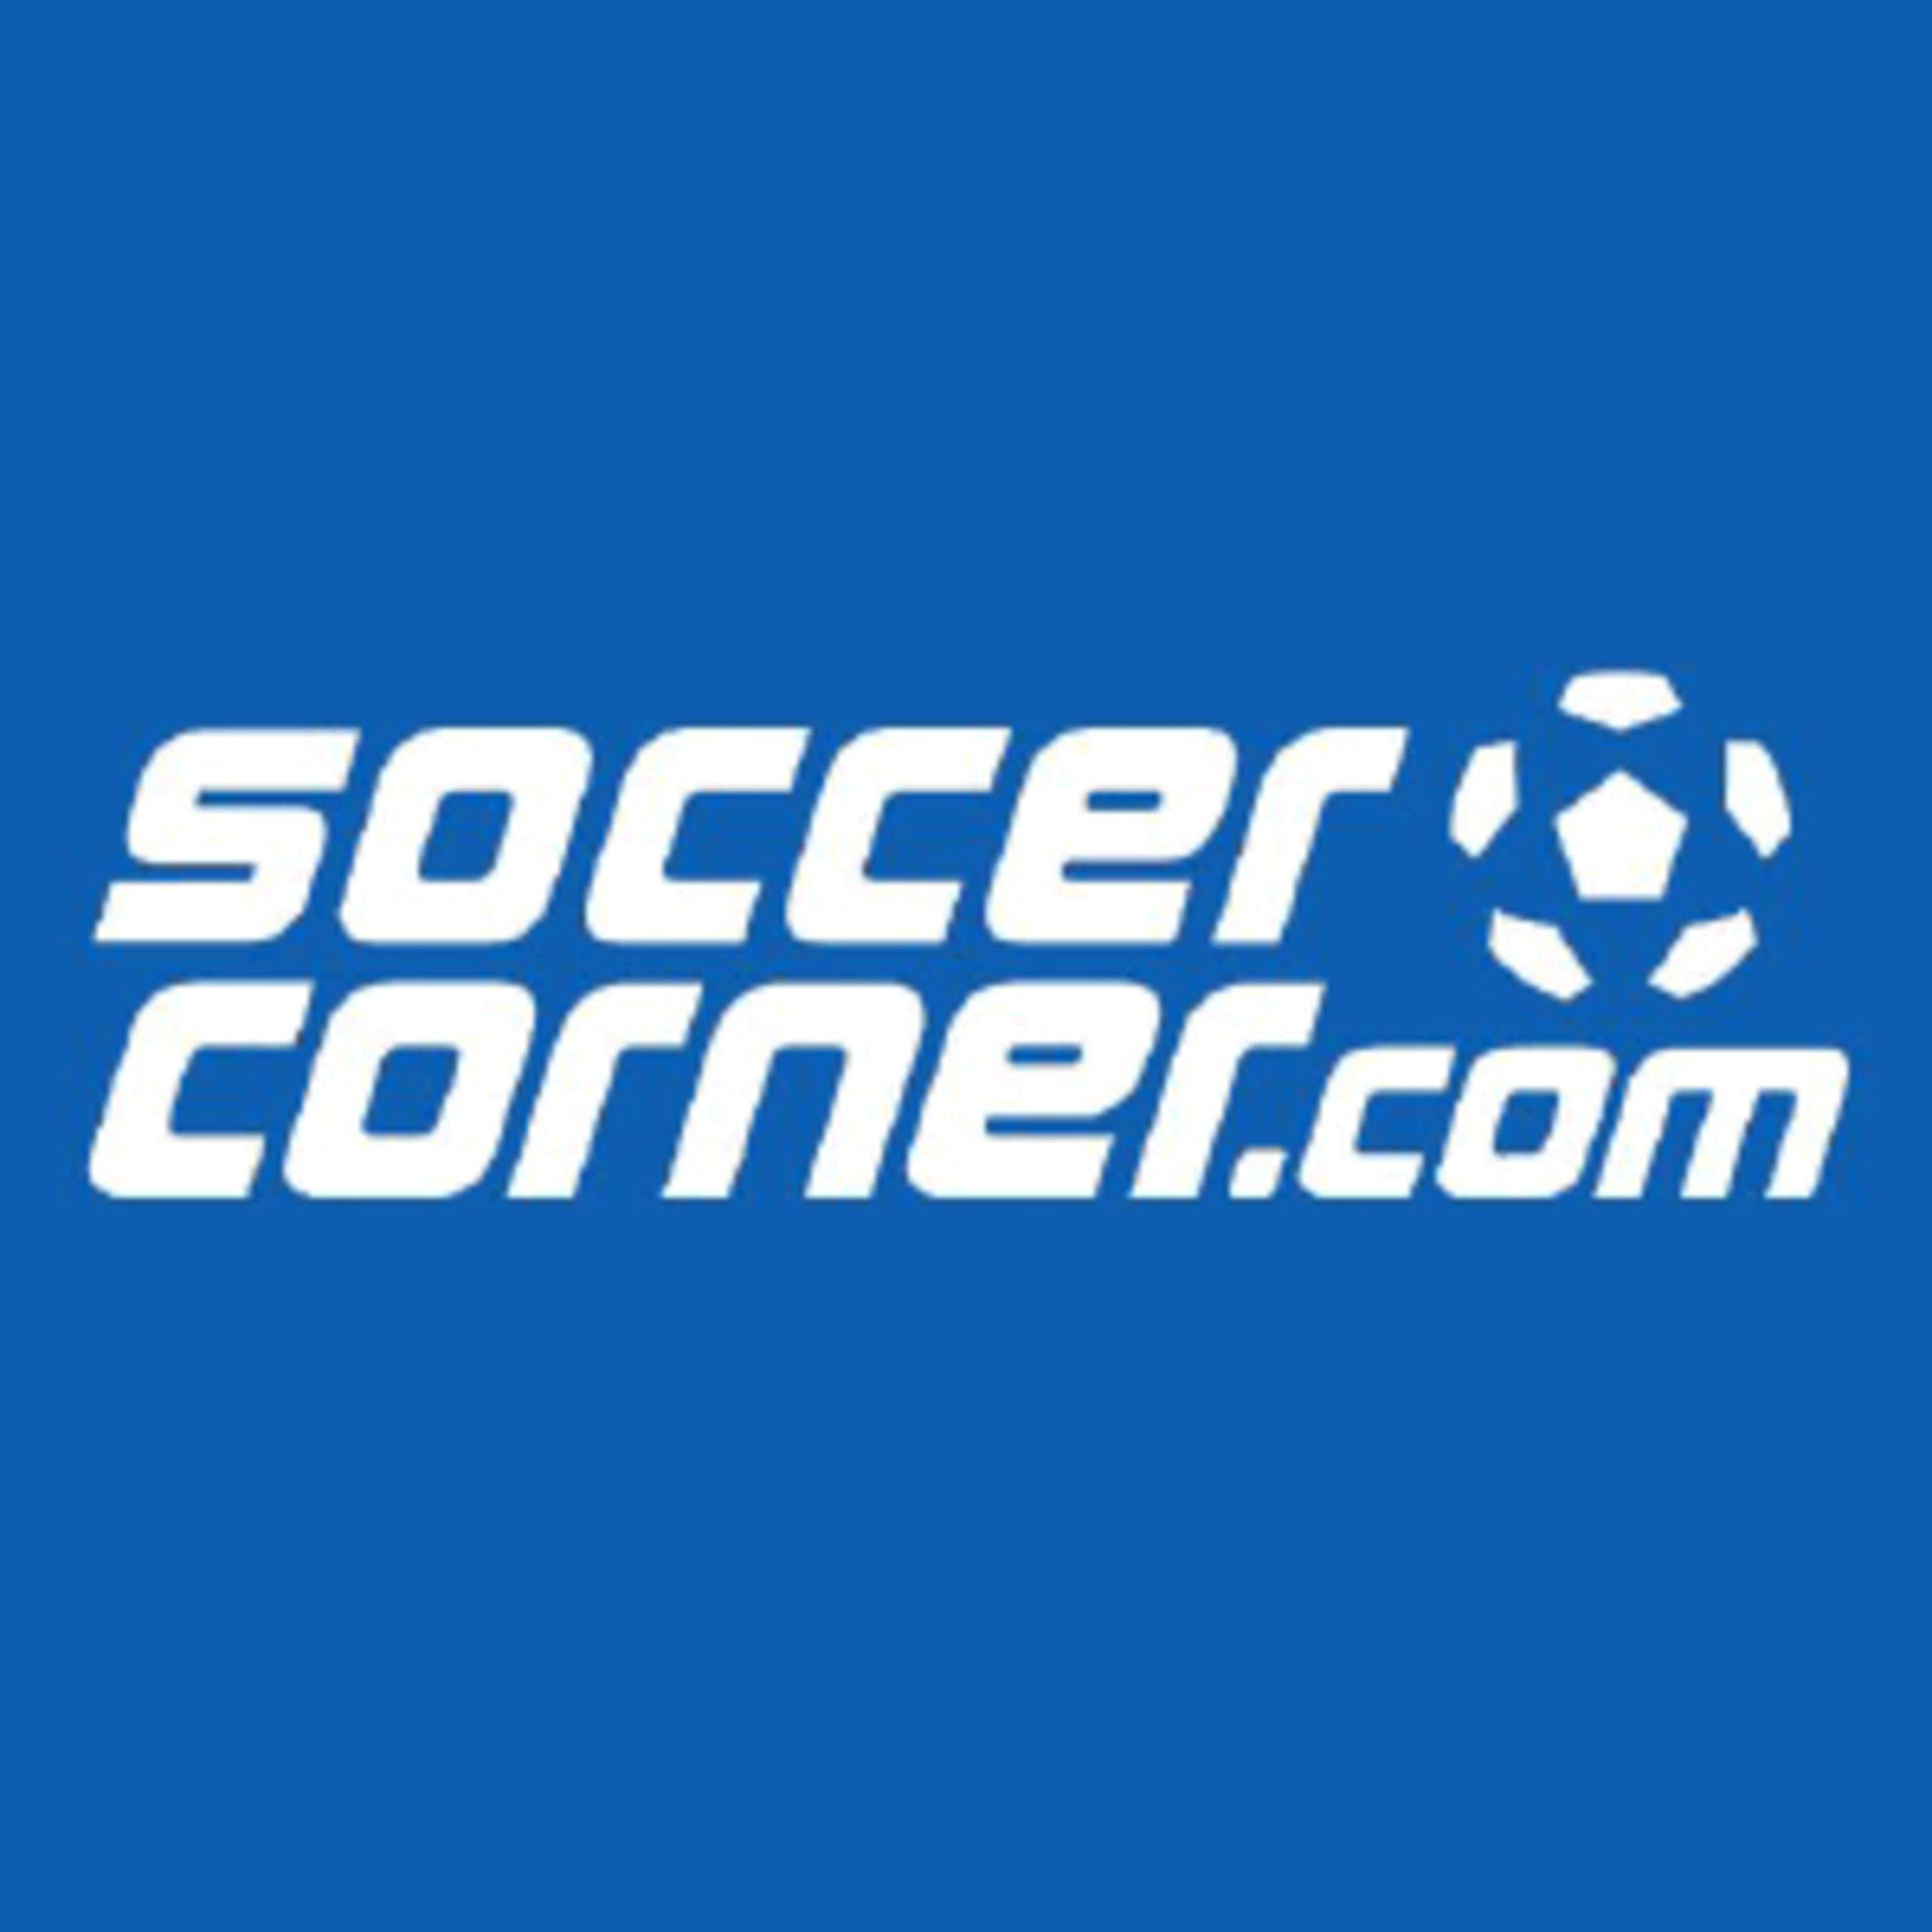 SoccerCorner.comCode